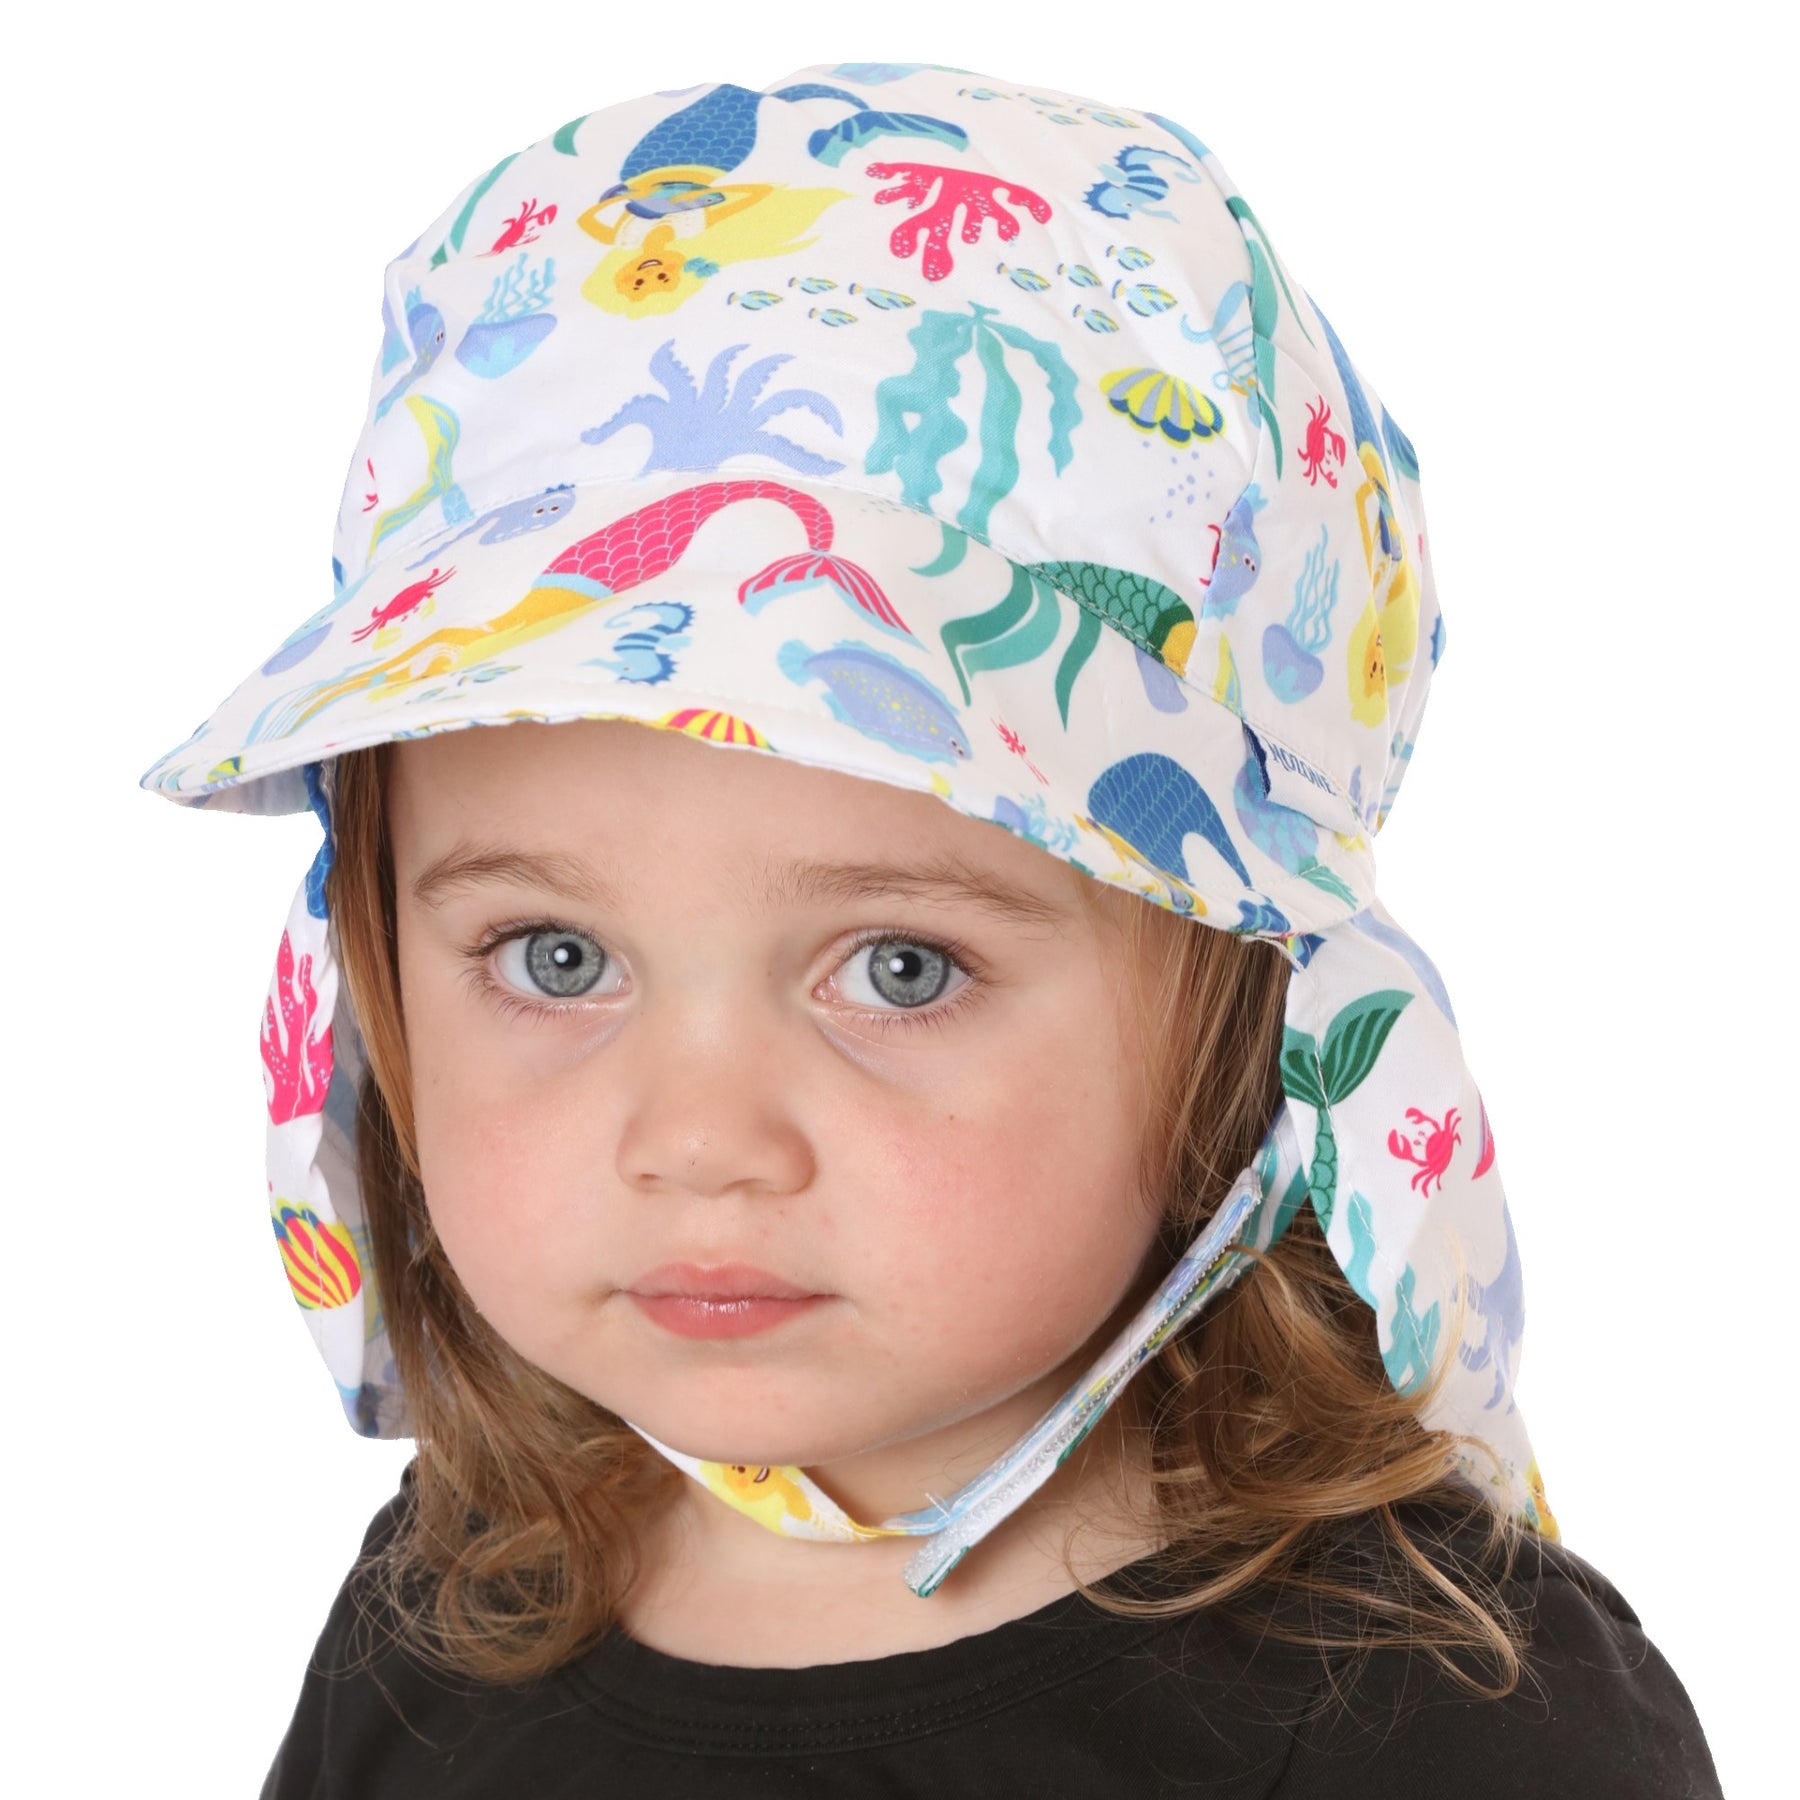 Better Baby Flap Hat